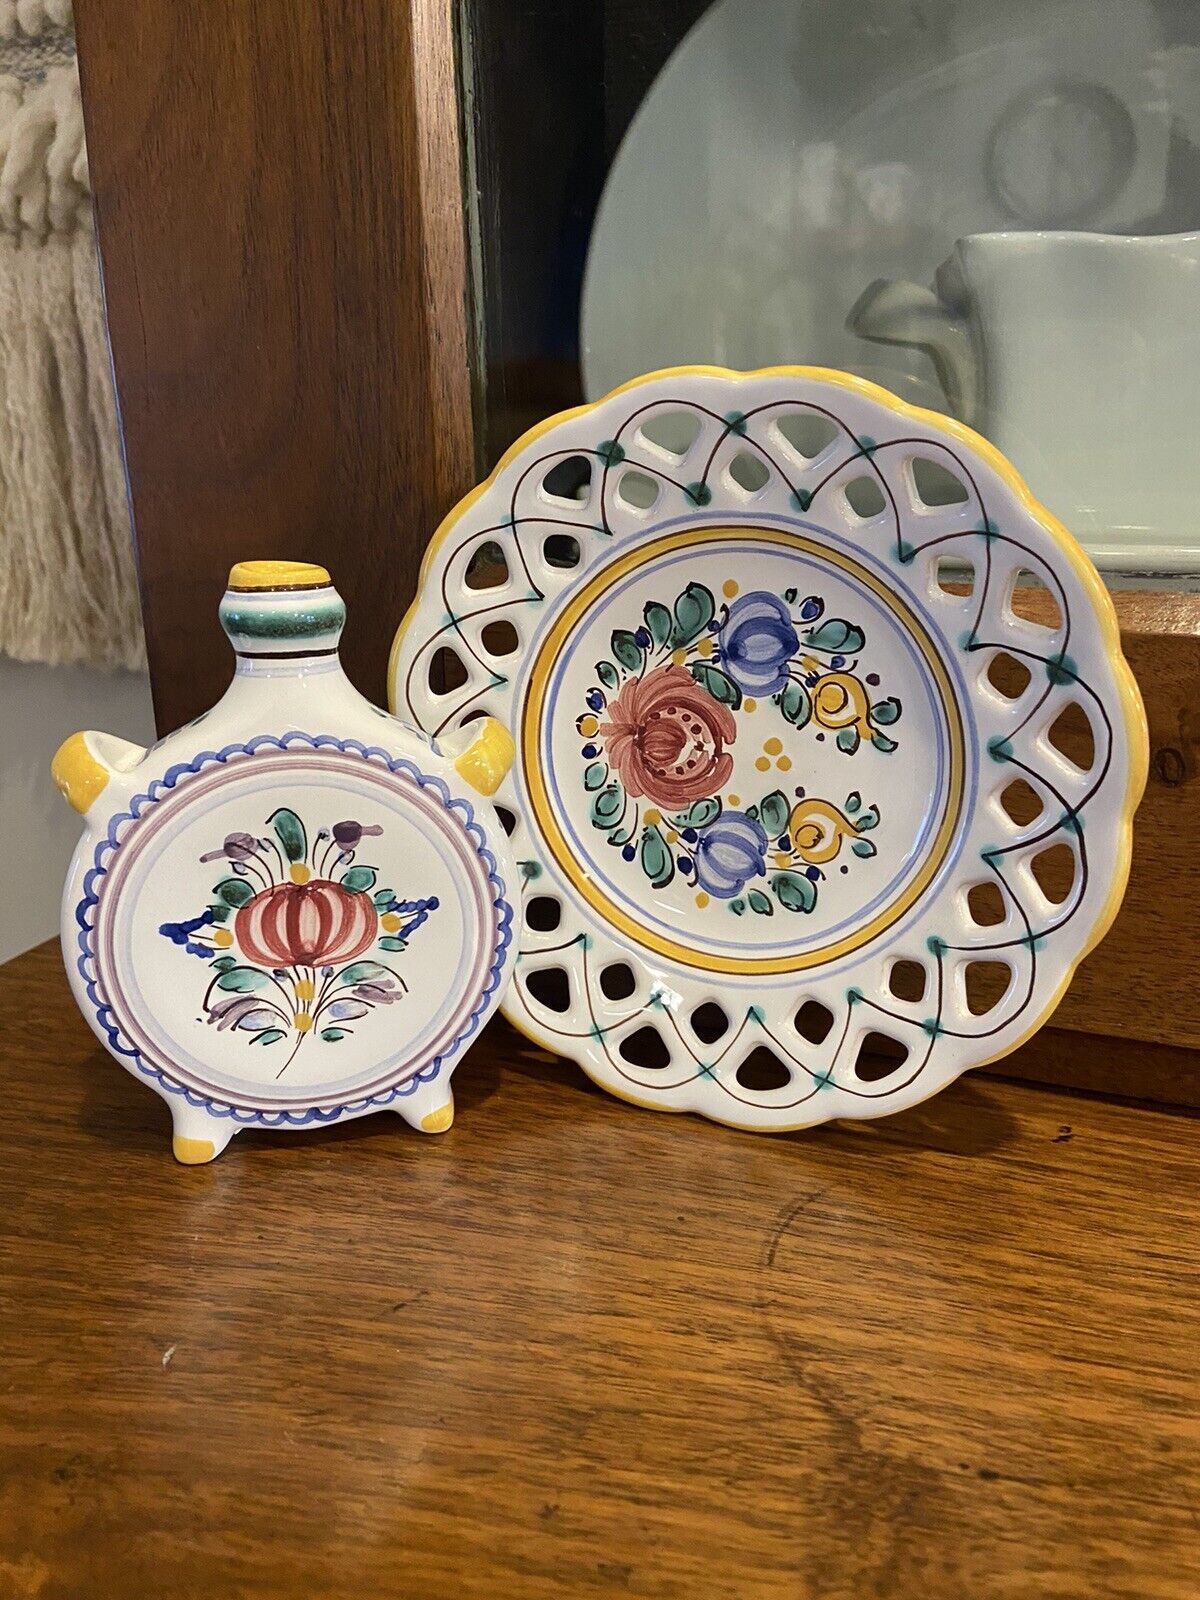 2 Piece Set OfModra Slovak Ceramic Flask/Decanter & Decorative Dish/Trinket Dish